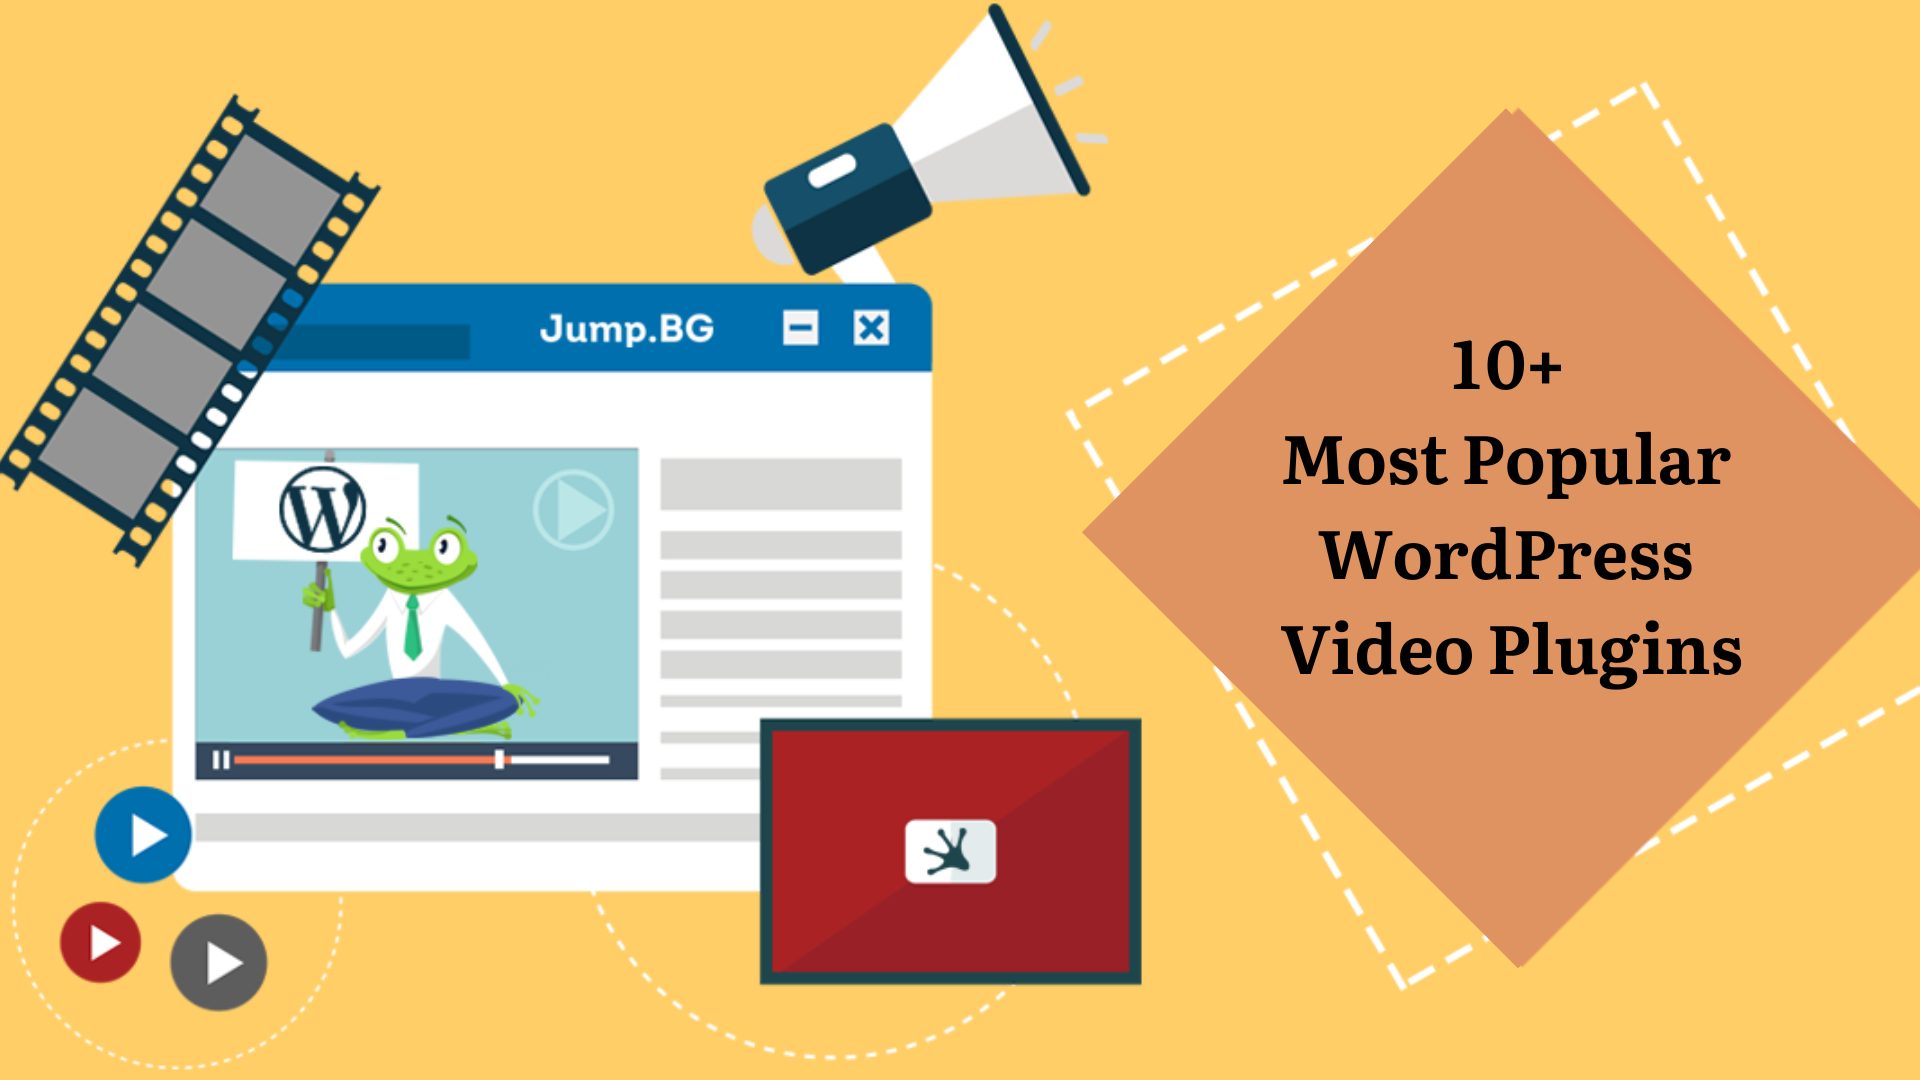 10+ Most Popular WordPress Video Plugins